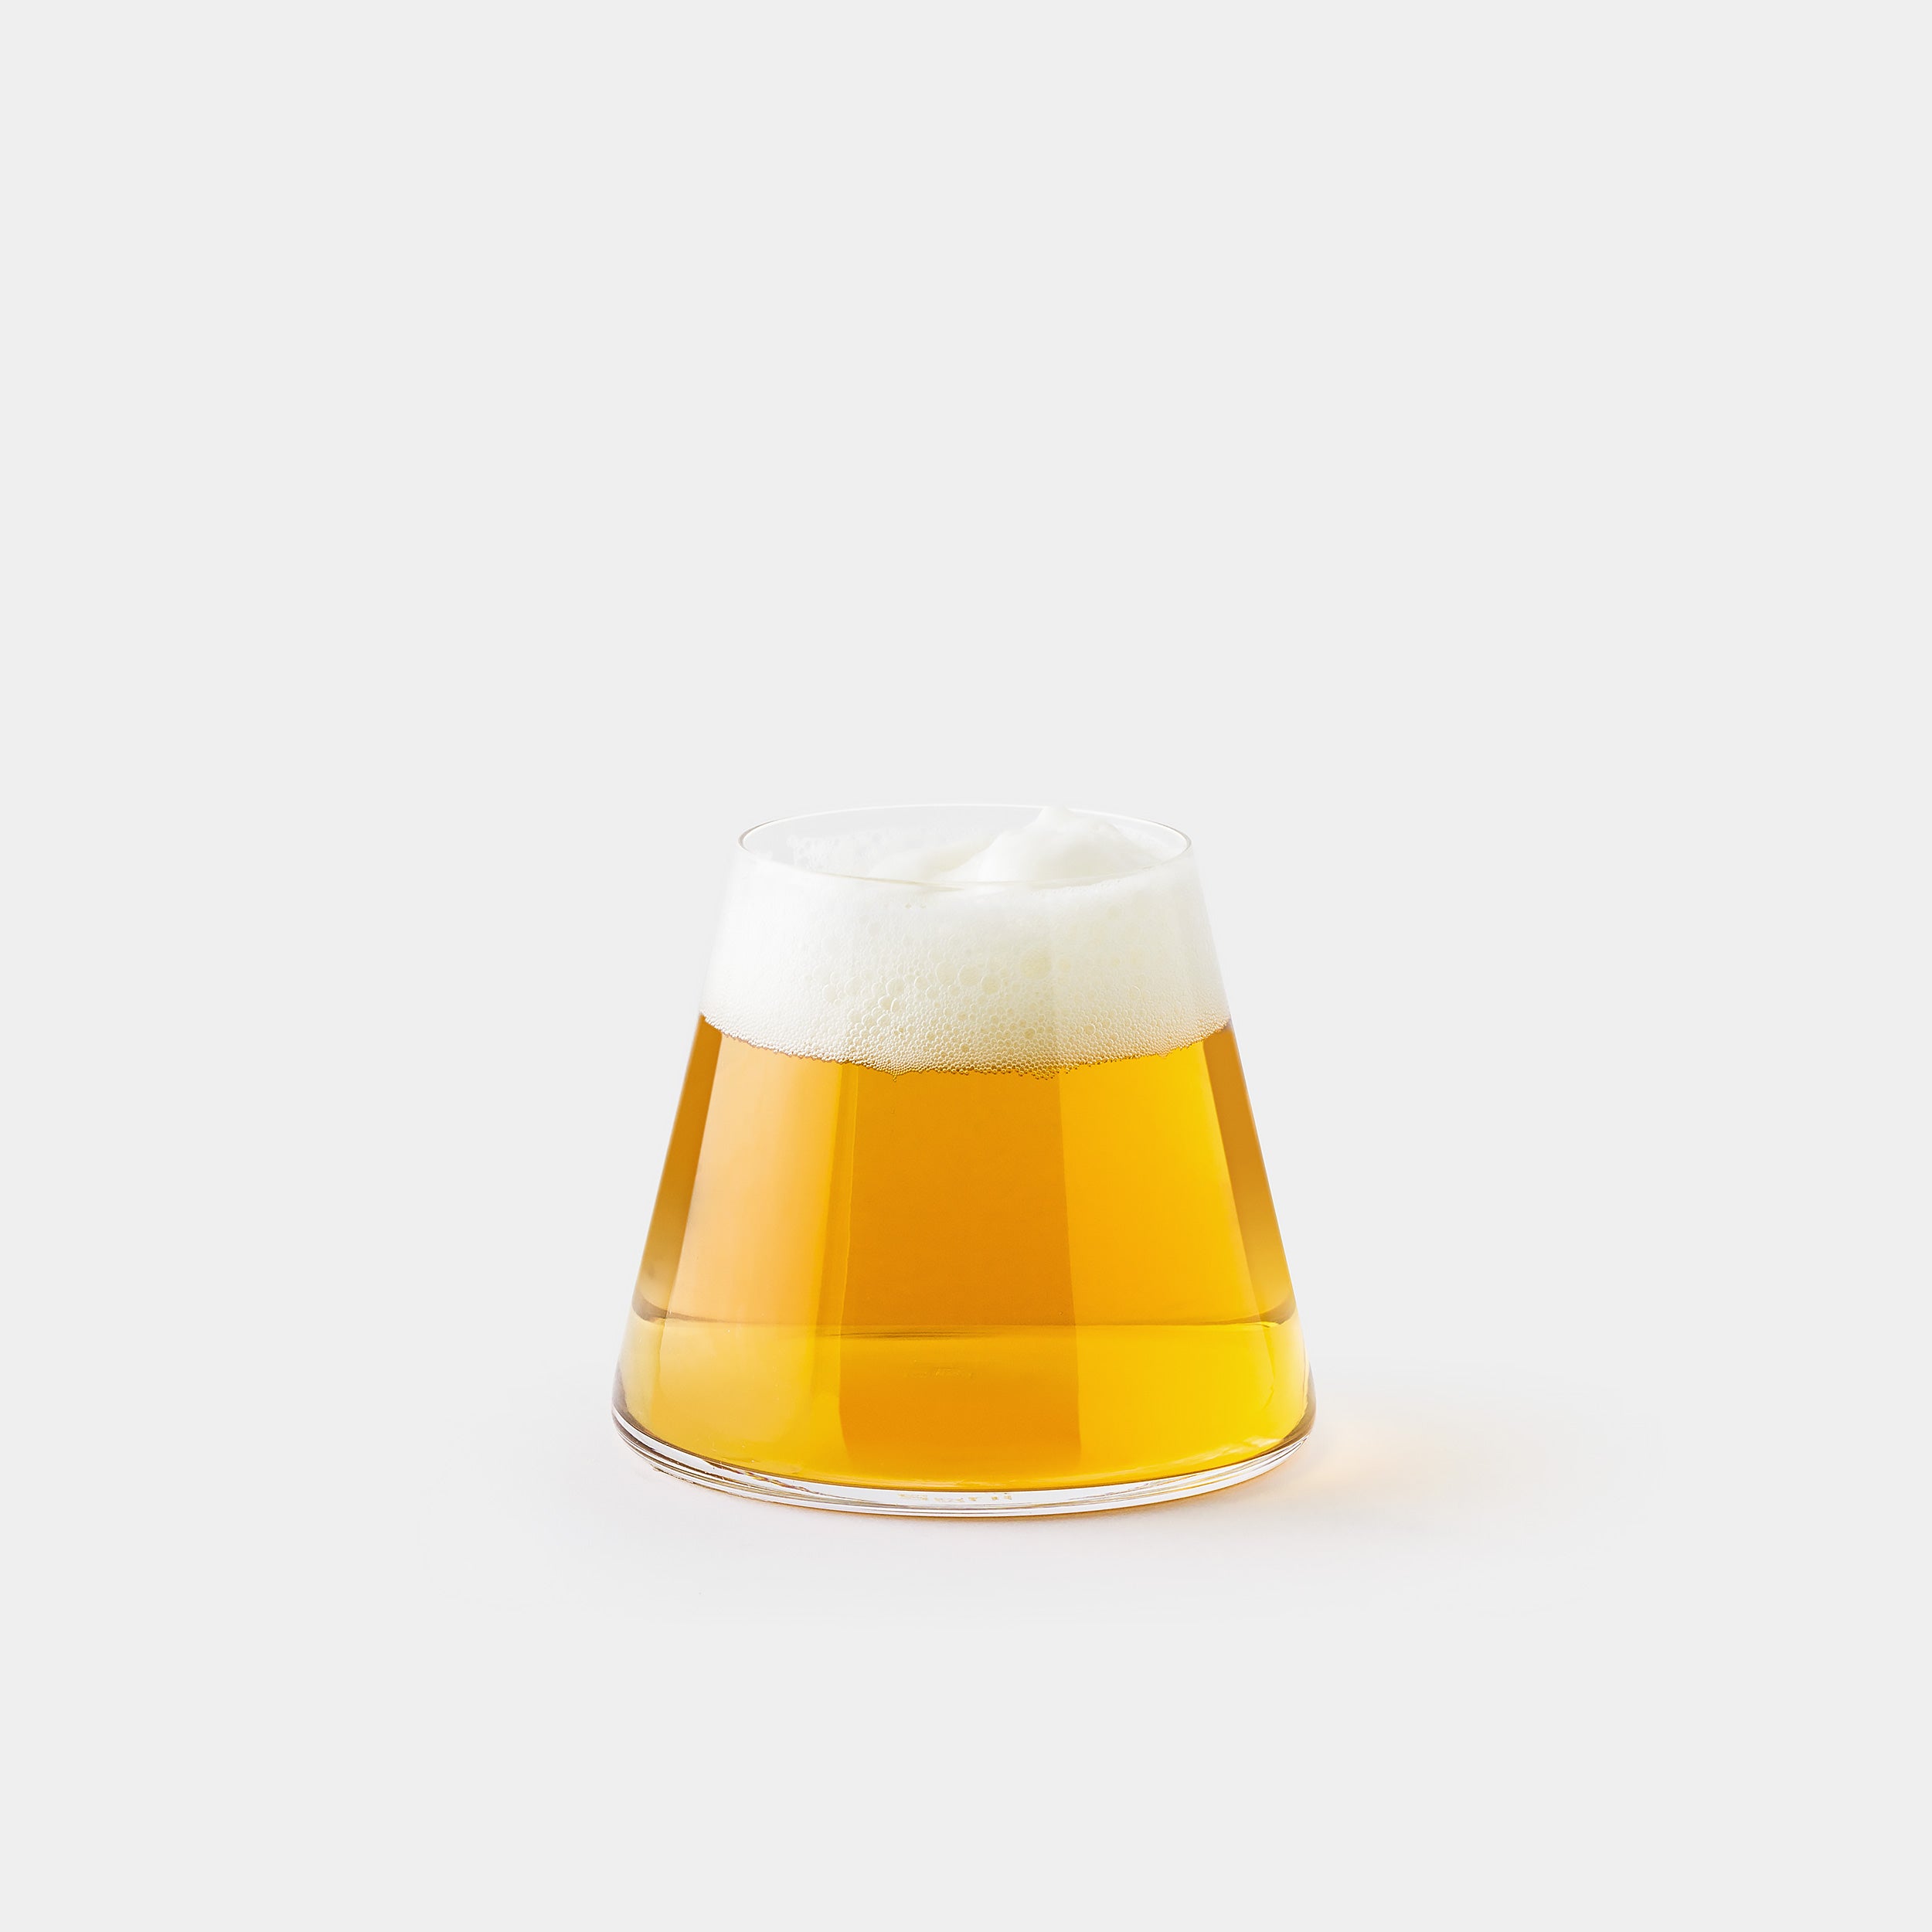 Fujiyama Beer Glass